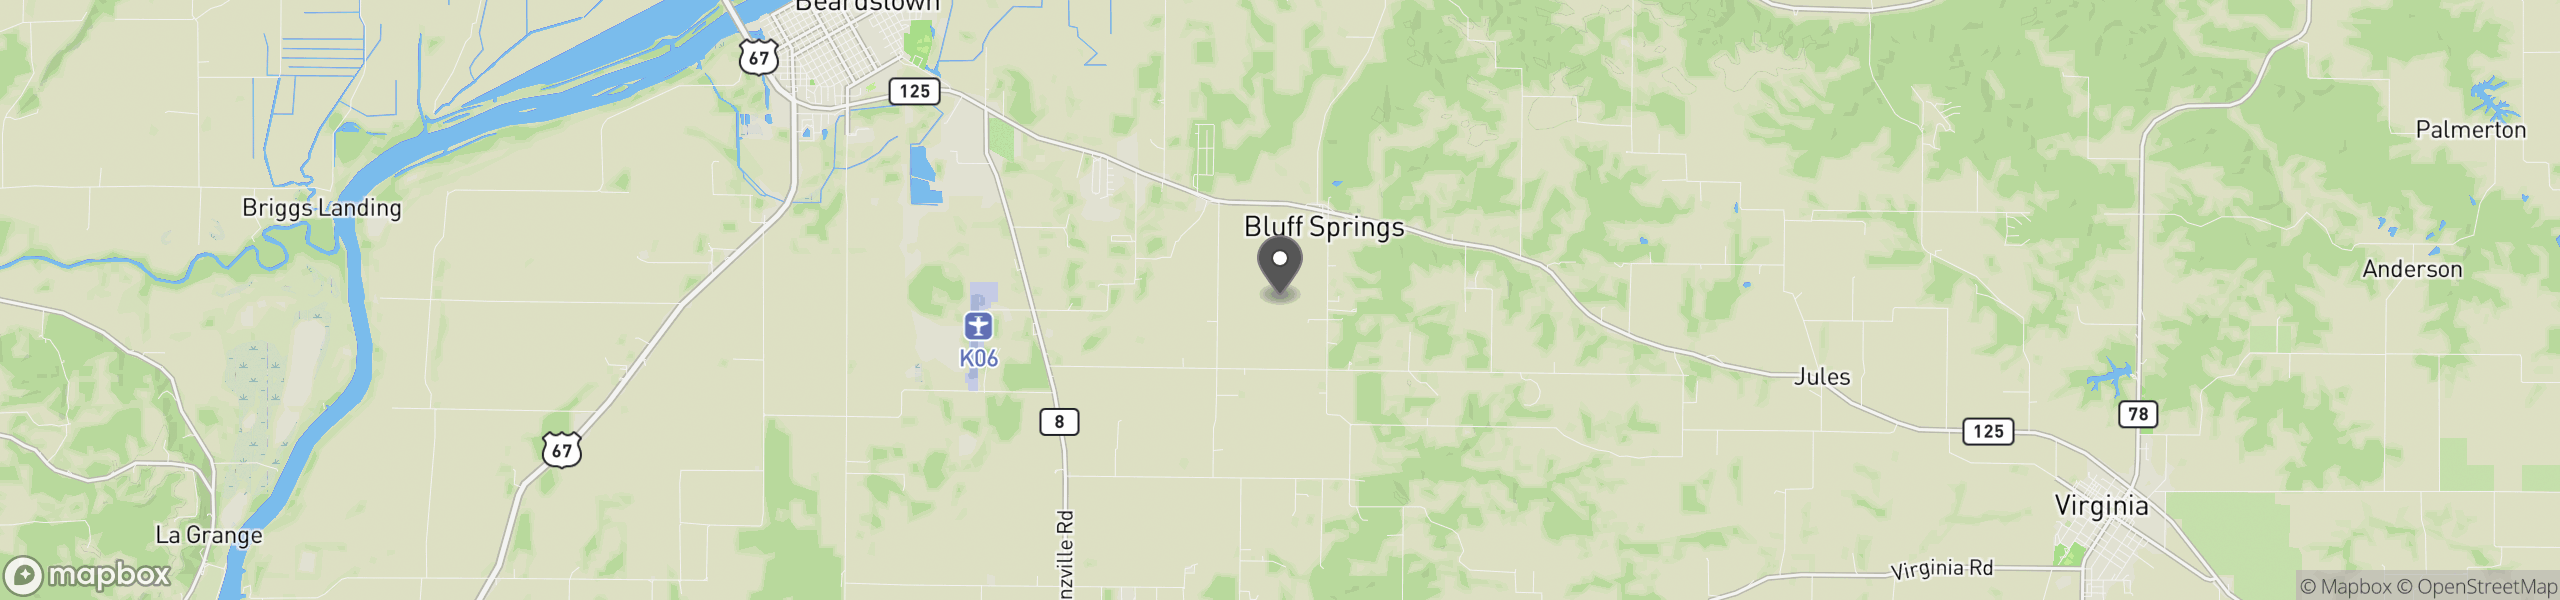 Bluff Springs, IL 62622